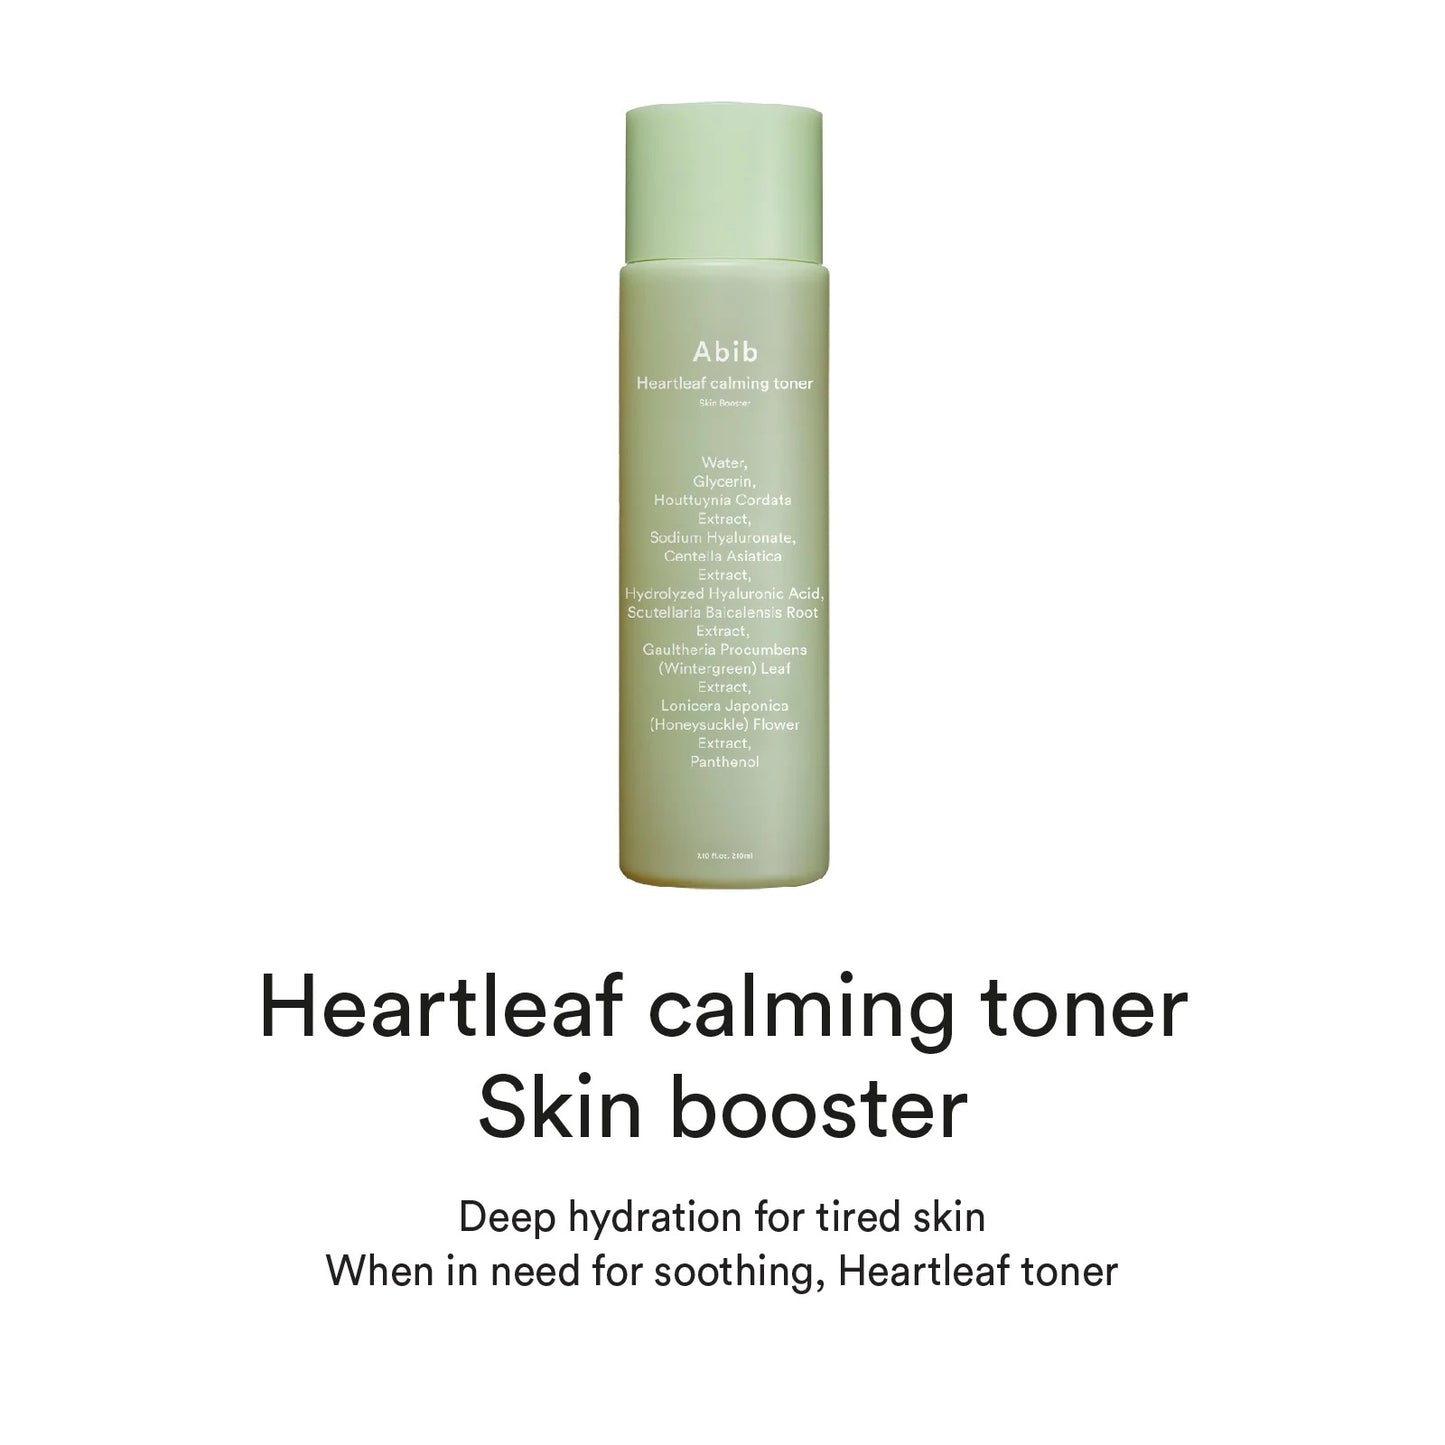 [Abib] Heartleaf calming toner Skin booster - 200ml